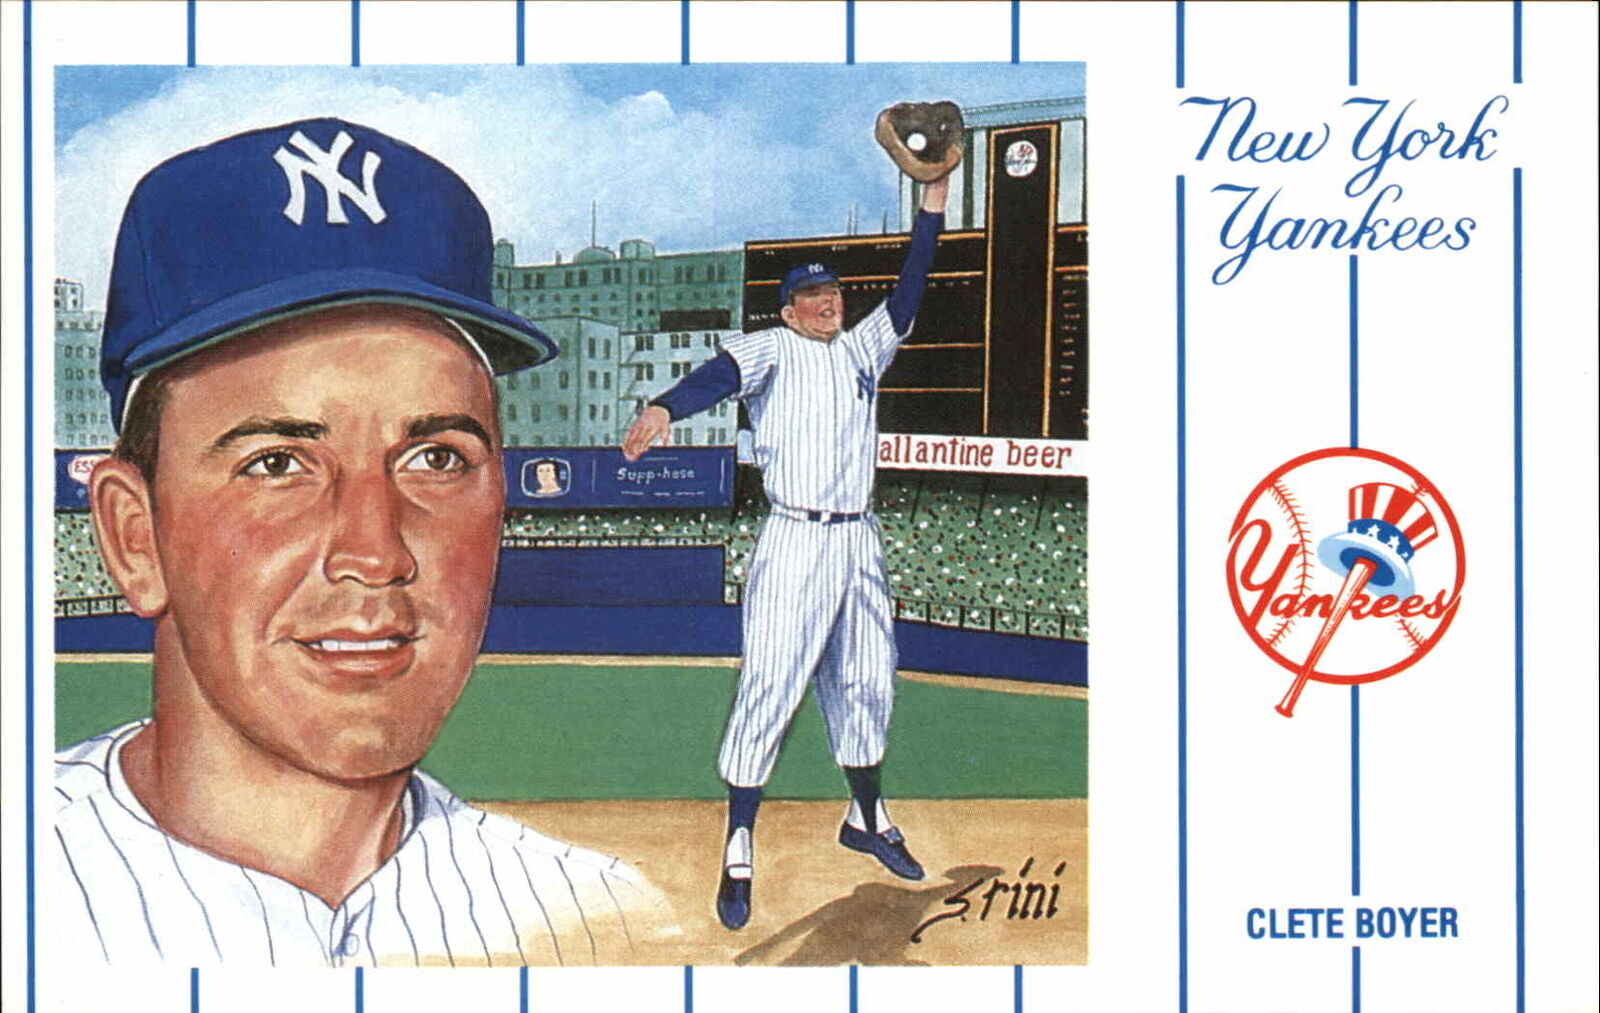 1961 NY Yankees Baseball Team 1991 Postcard Series 1 CLETE BOYER